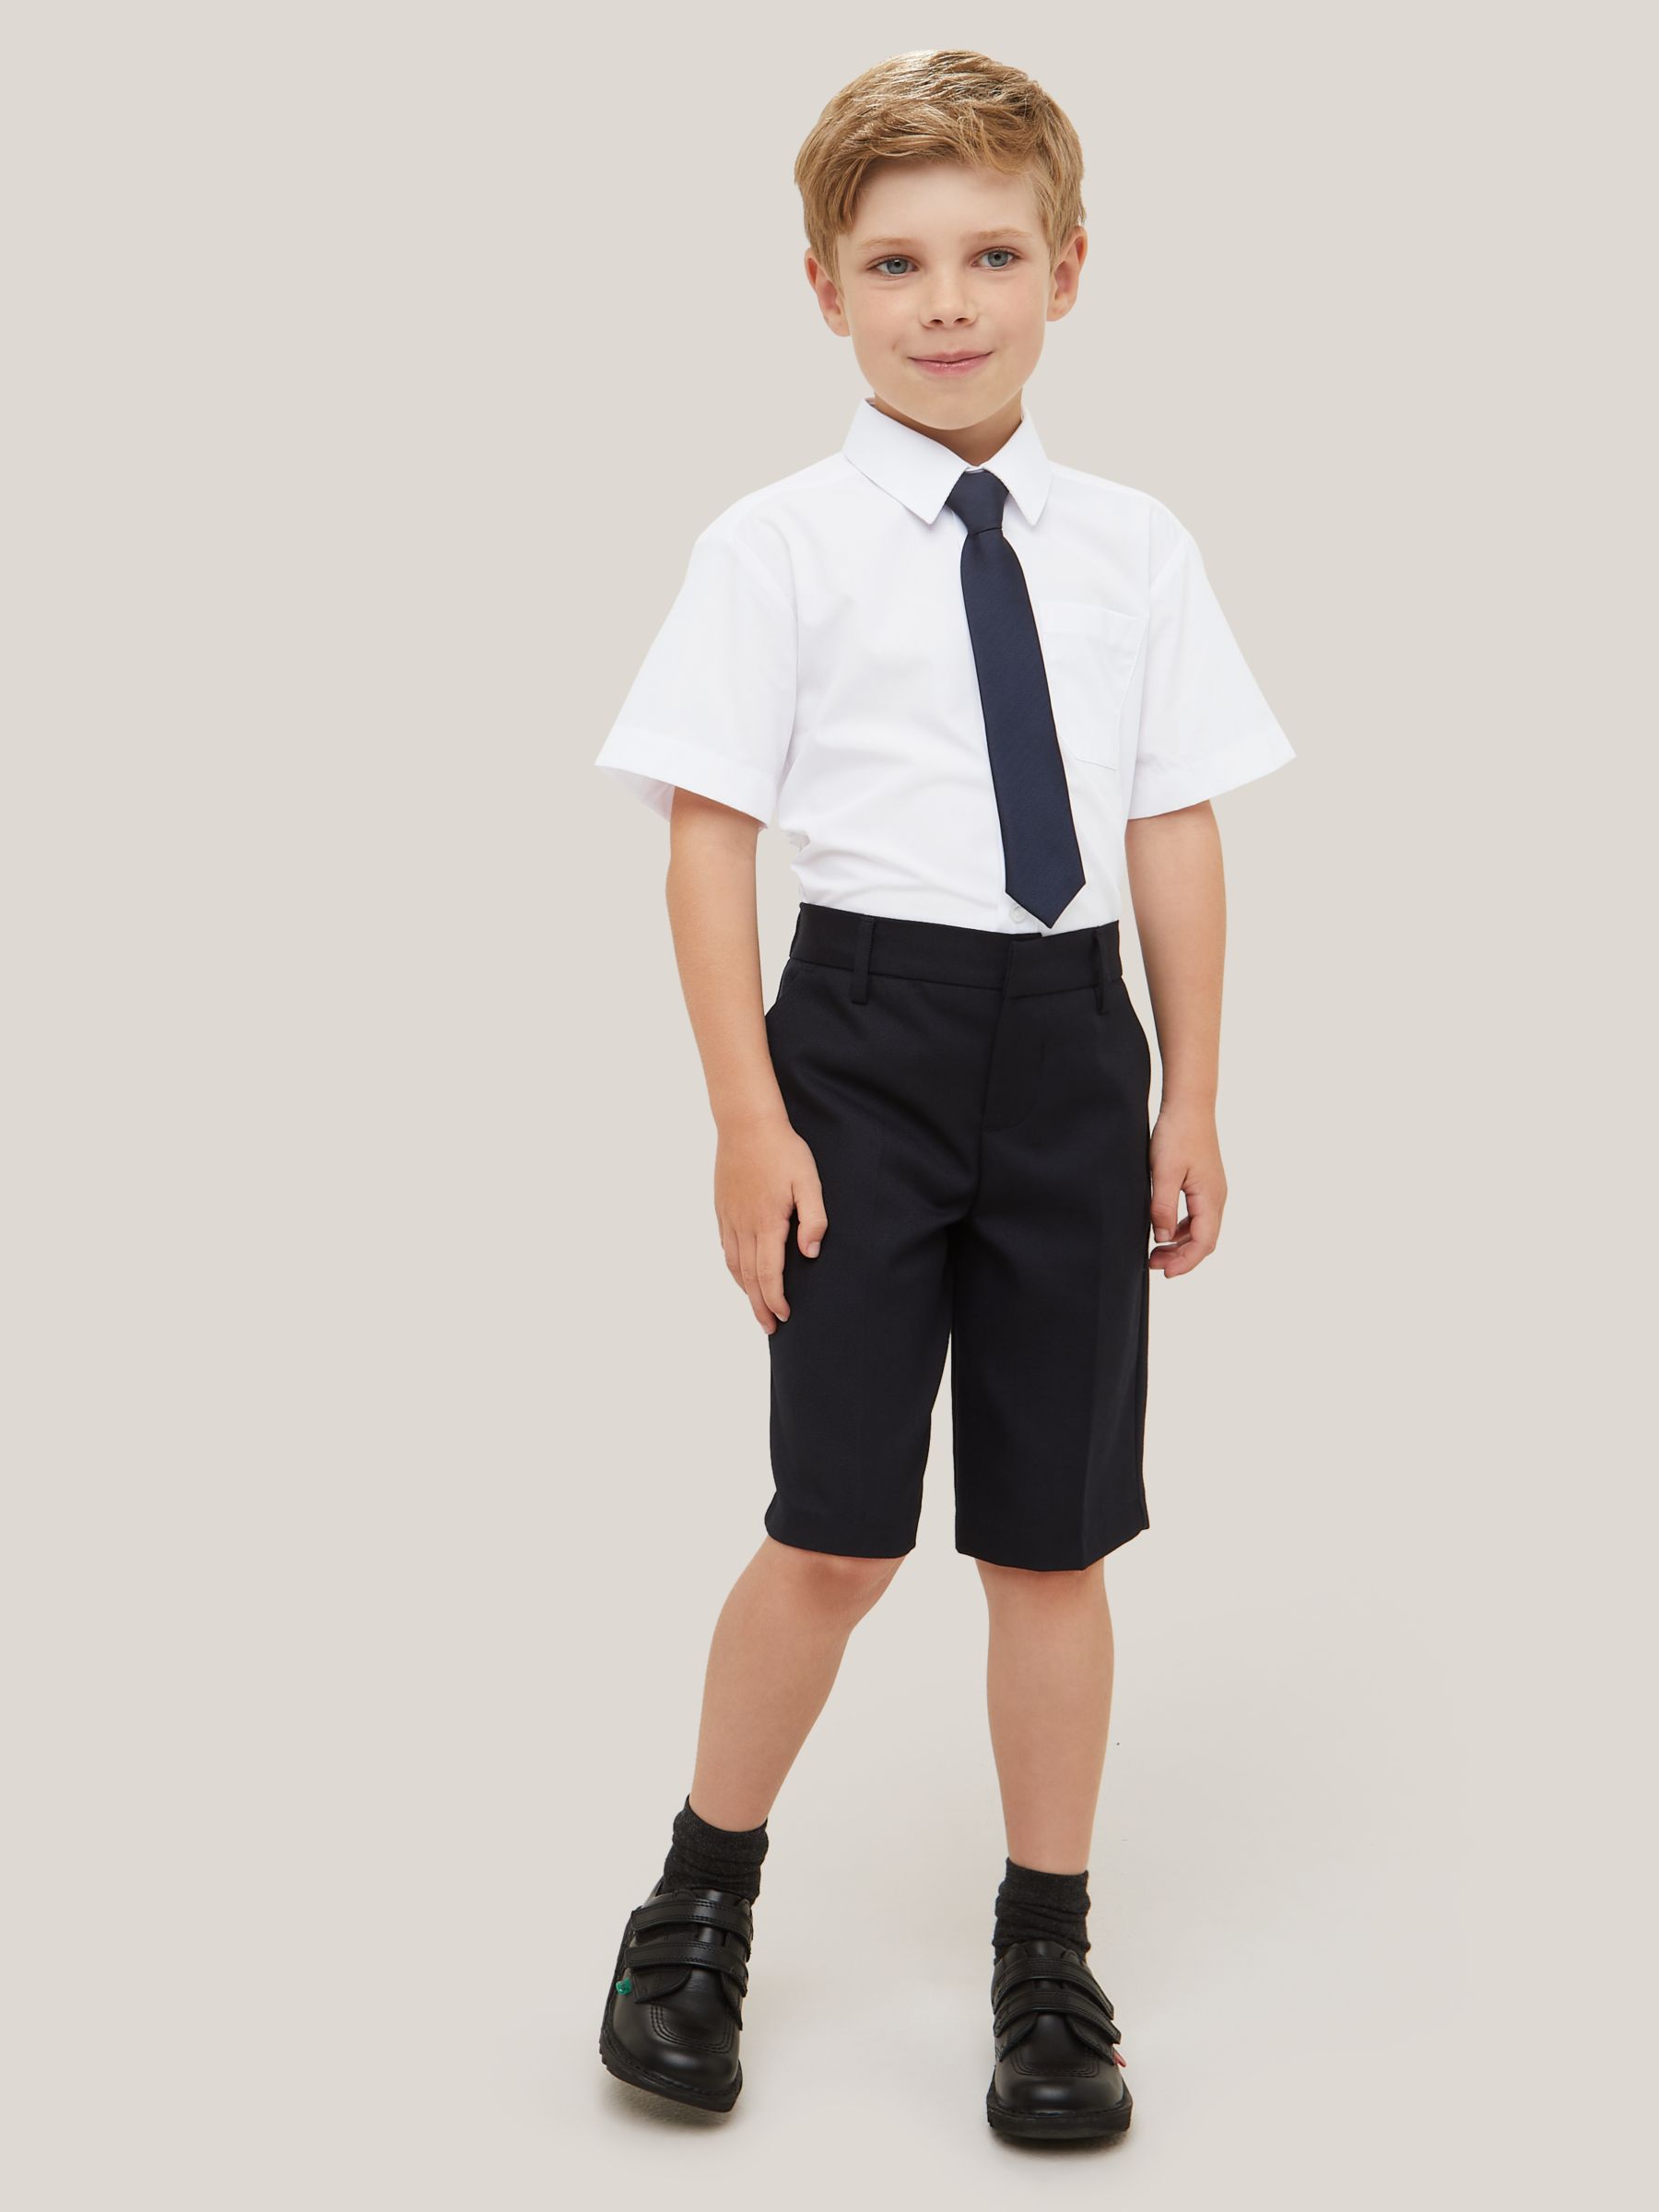 Buy John Lewis ANYDAY The Basics Boys' Short Sleeved Shirt, Pack of 3, White Online at johnlewis.com